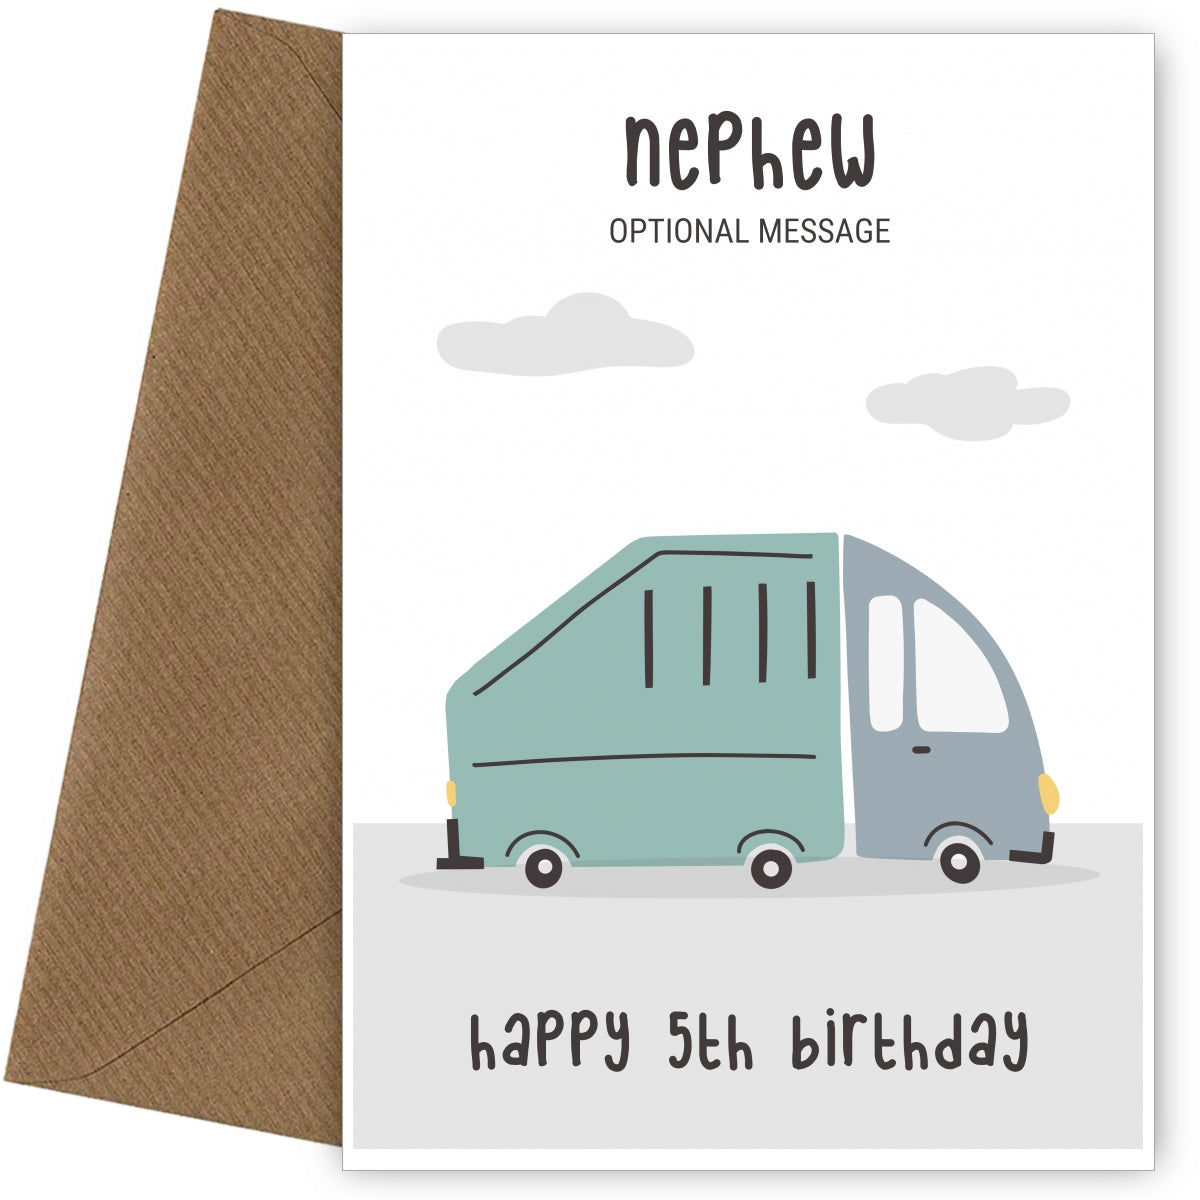 Fun Vehicles 5th Birthday Card for Nephew - Garbage Truck